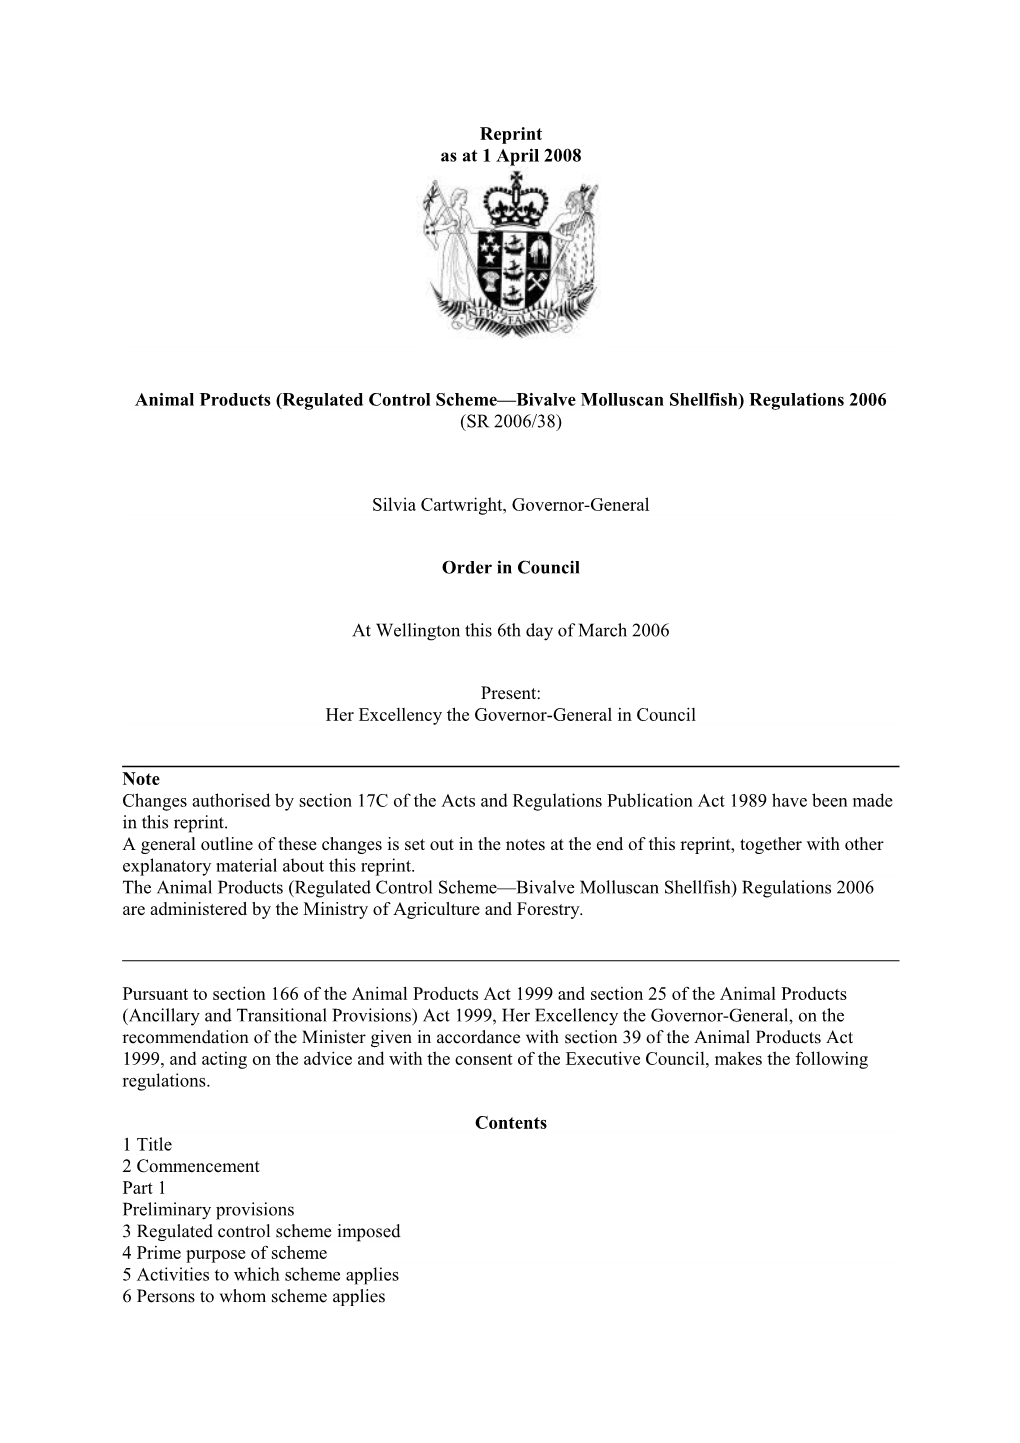 Animal Products (Regulated Control Scheme Bivalve Molluscan Shellfish) Regulations 2006